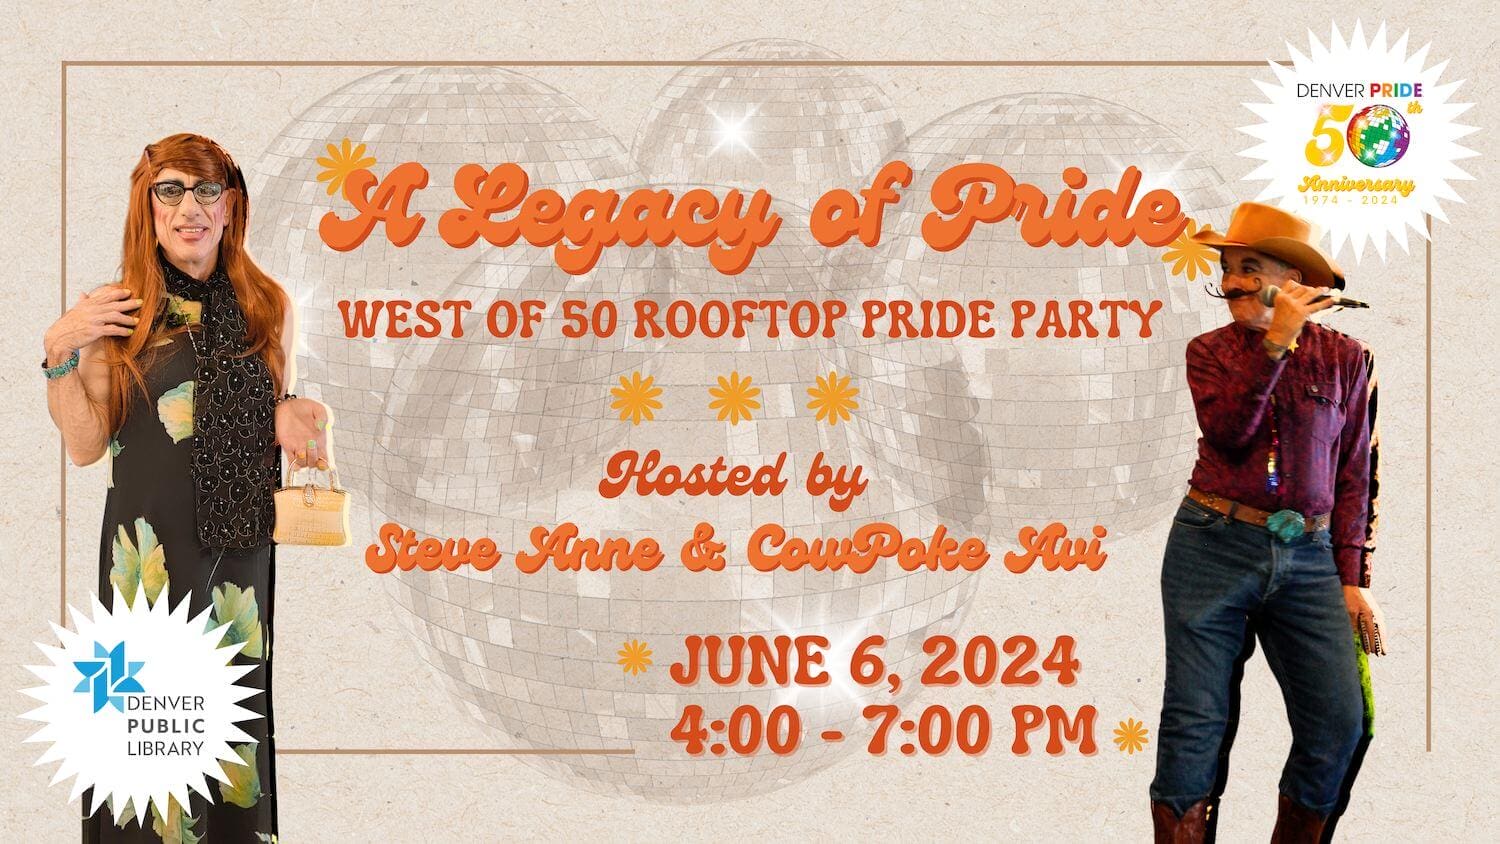 West of 50 x Denver Public Library Rooftop Pride Party | June 6, 2024, 4:00 - 7:00 PM